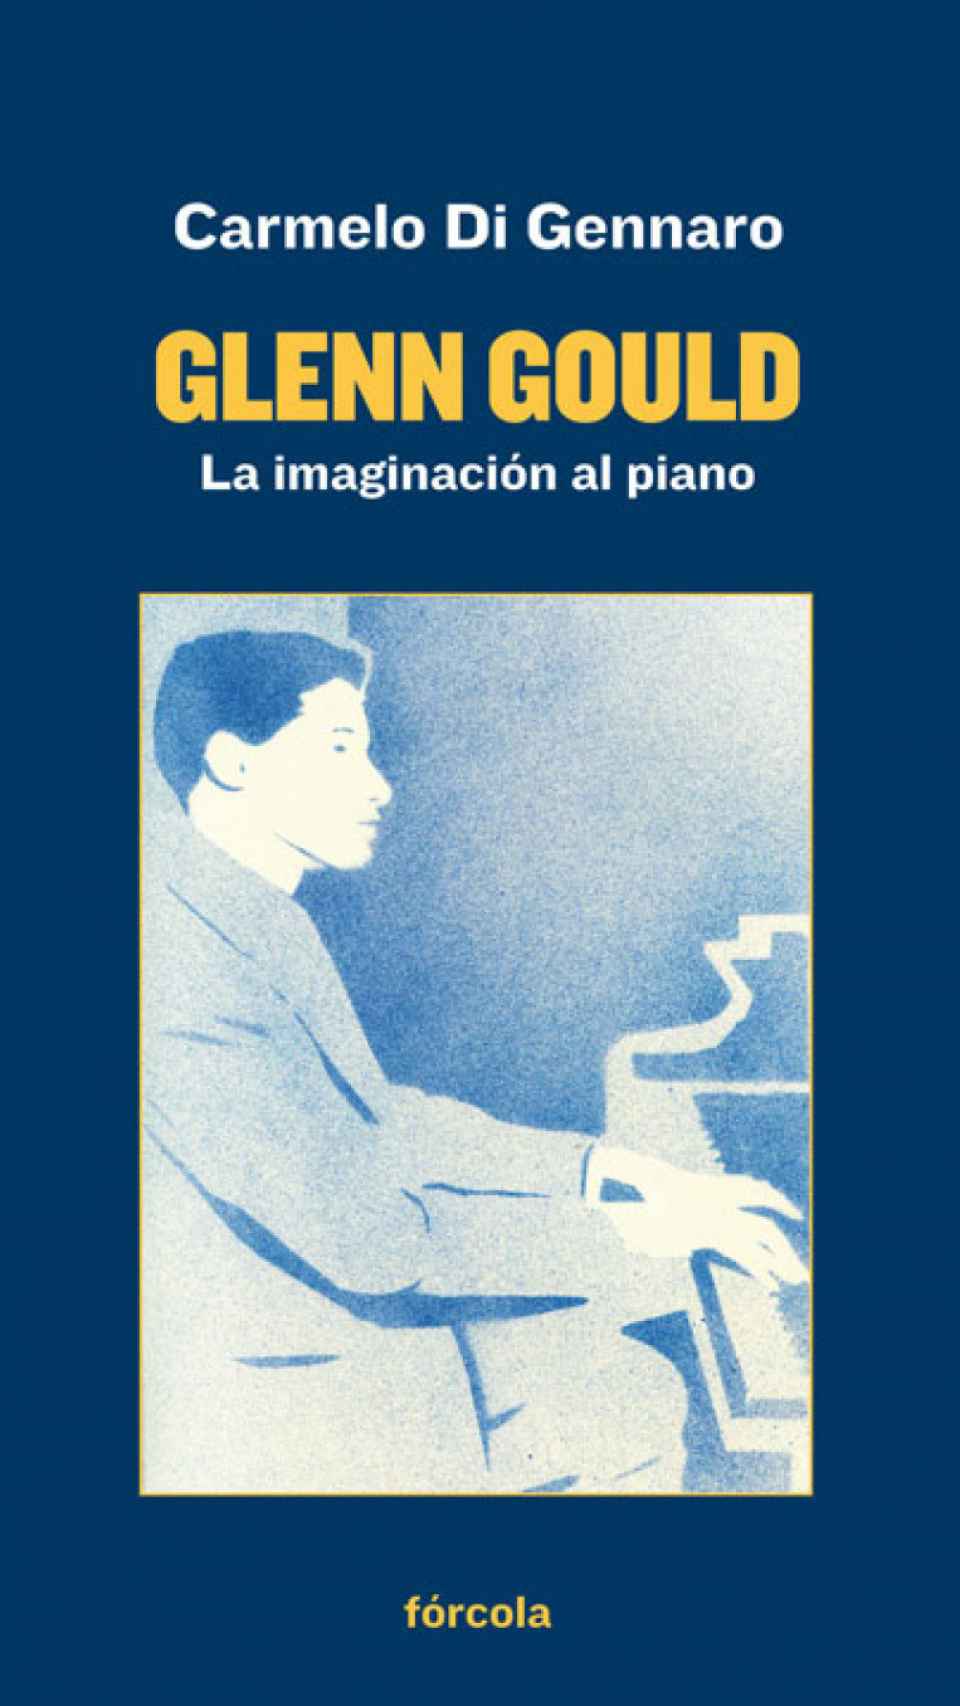 'Glenn Gould'